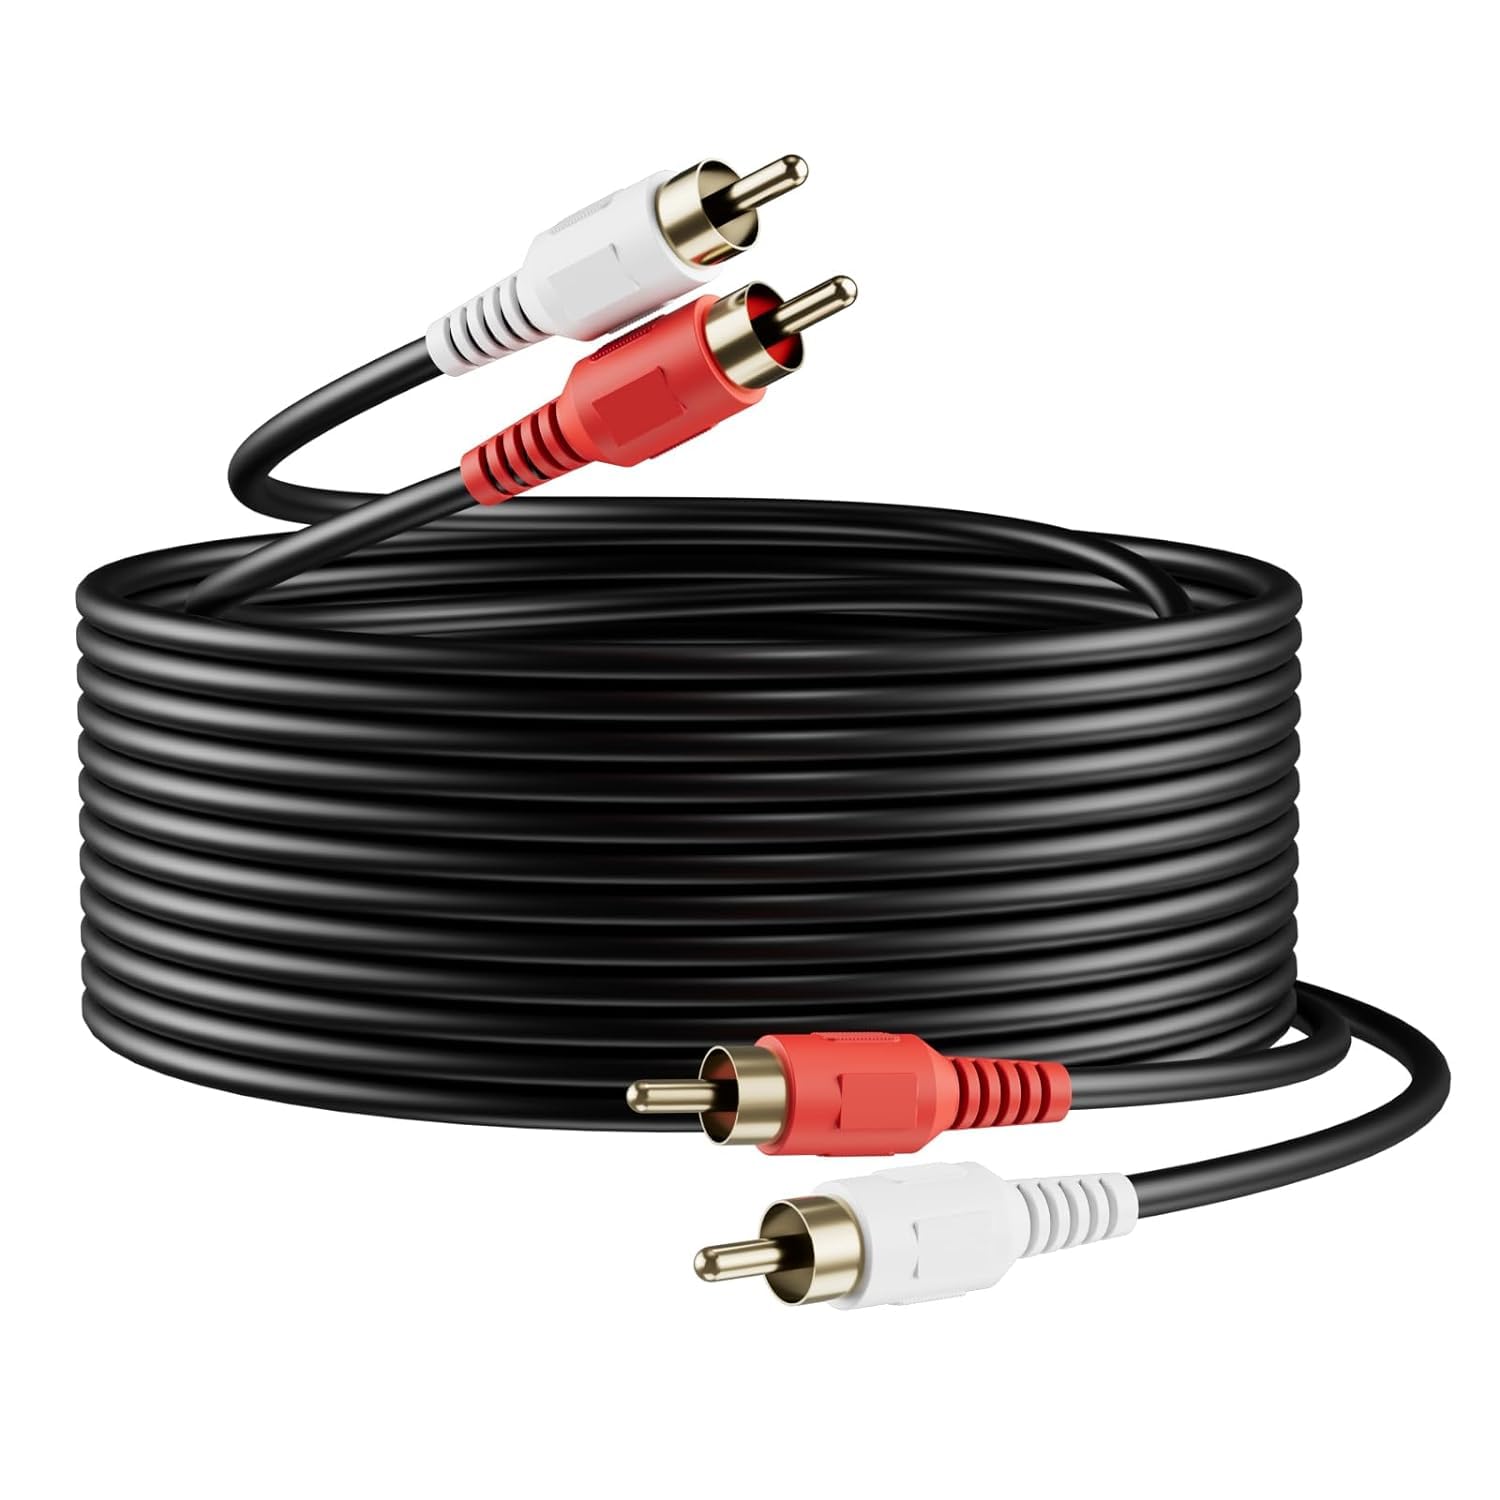 KEBILSHOP 2rca Male to 2rca Male, av 2 RCA Cable - 1.5 Meter